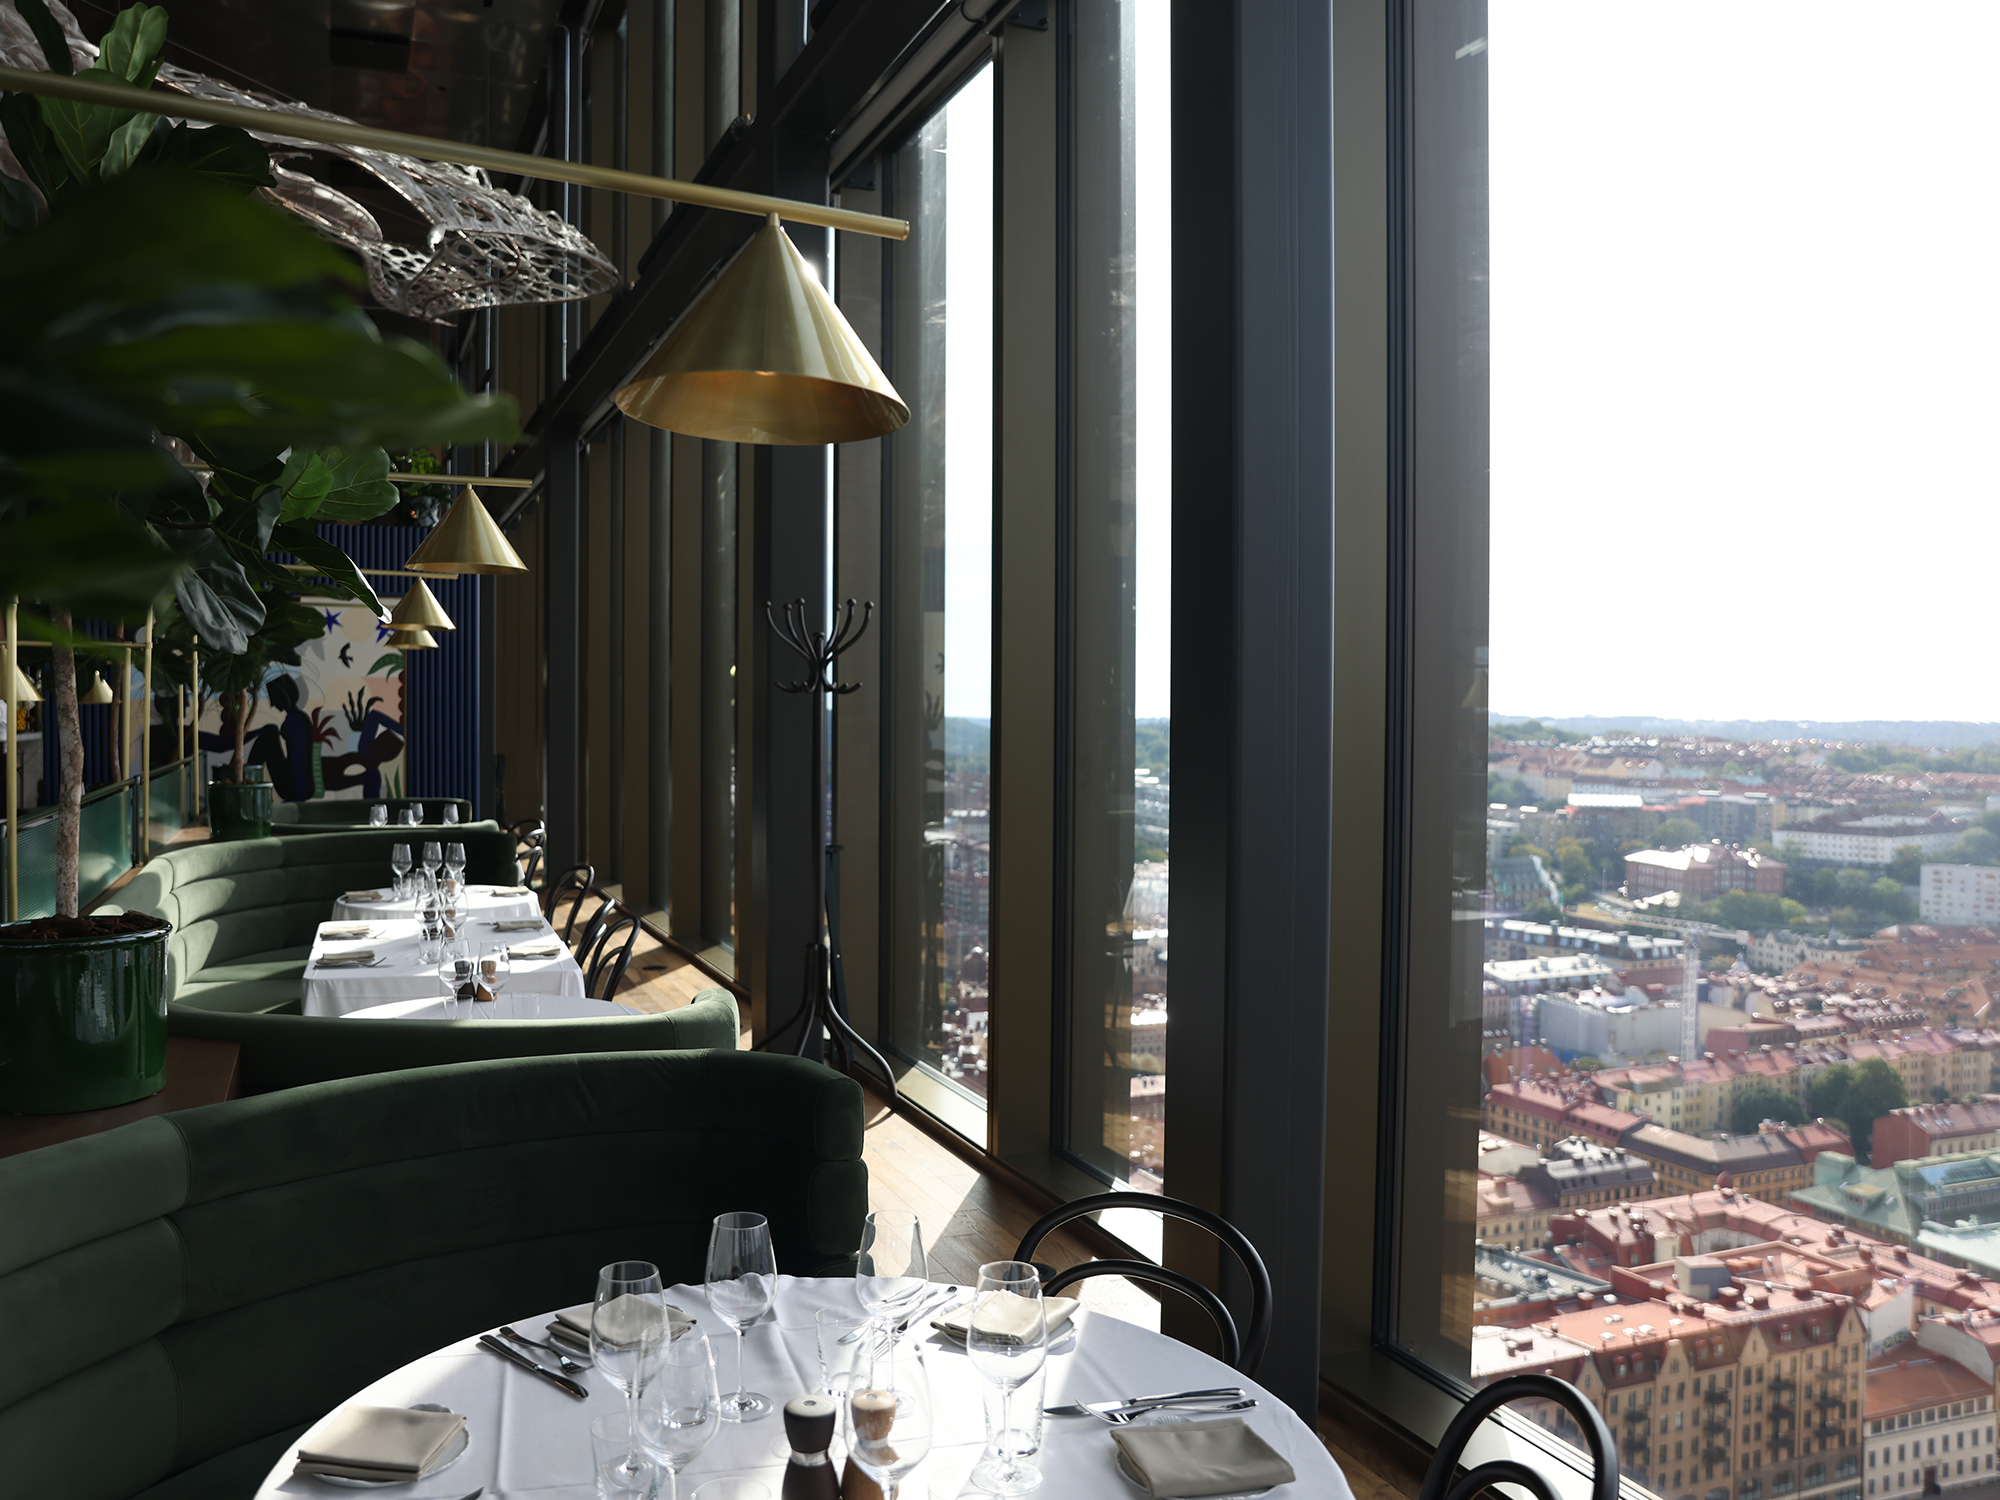 Utsikt över Göteborg från restaurangen Brasserie Draken.